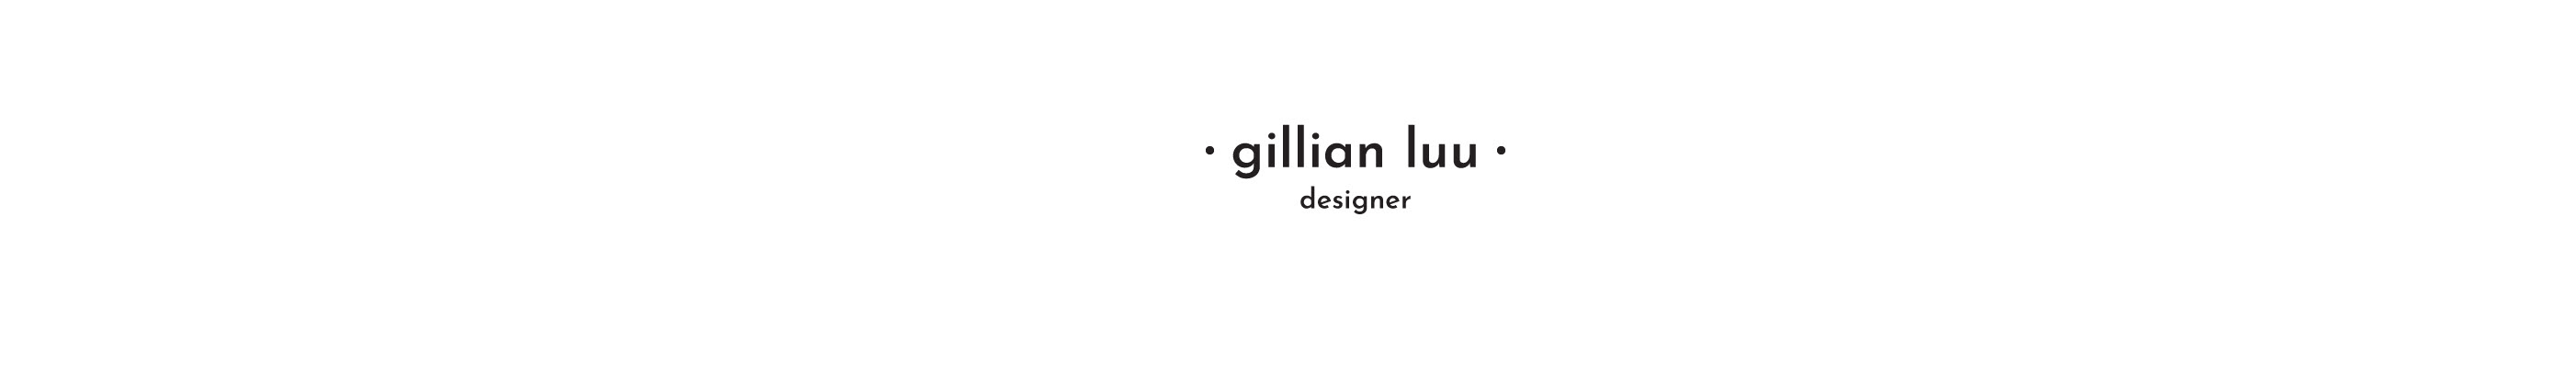 Gillian Luus profilbanner